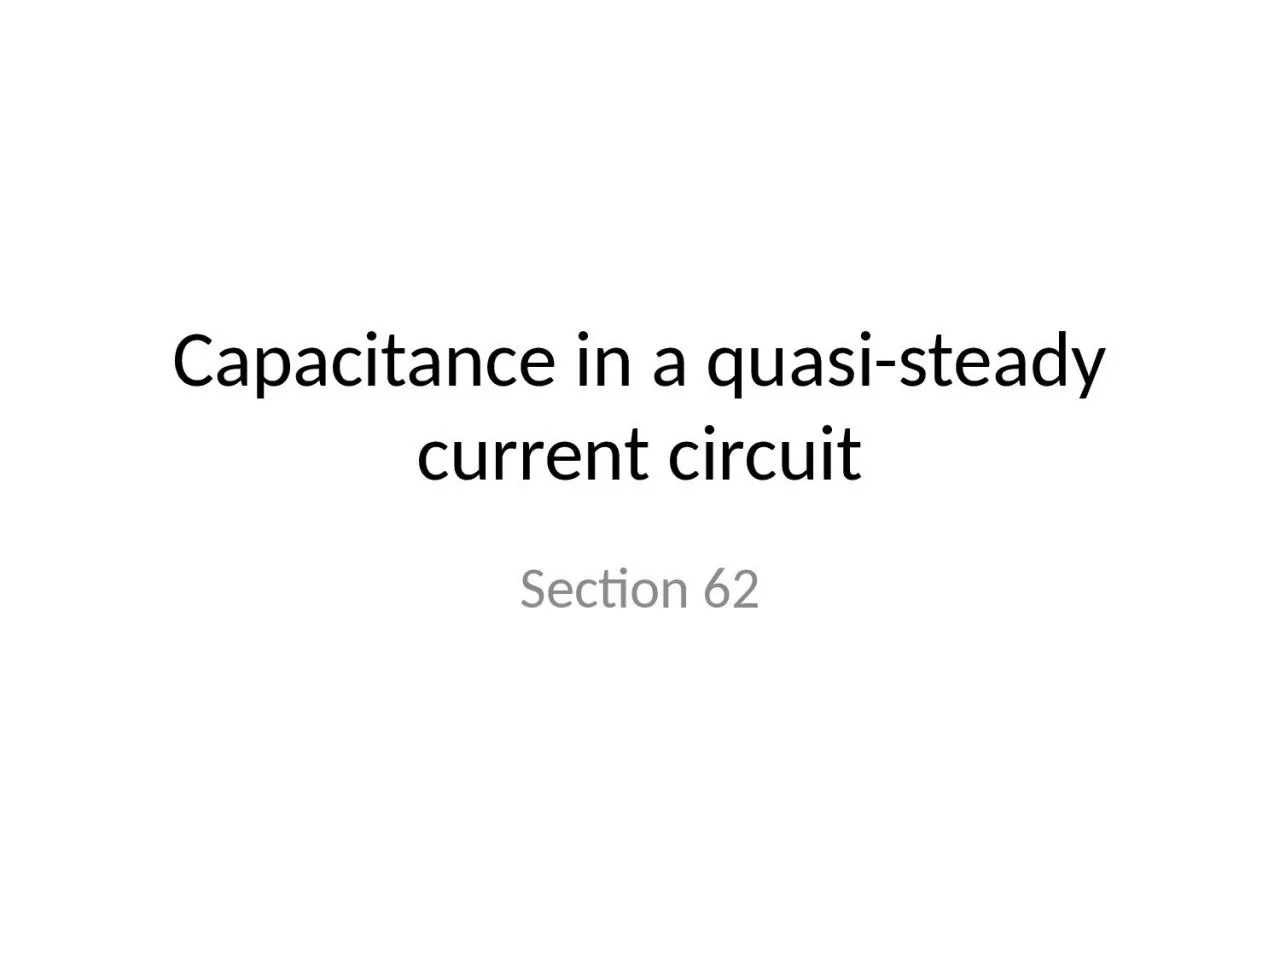 Capacitance in a quasi-steady current circuit